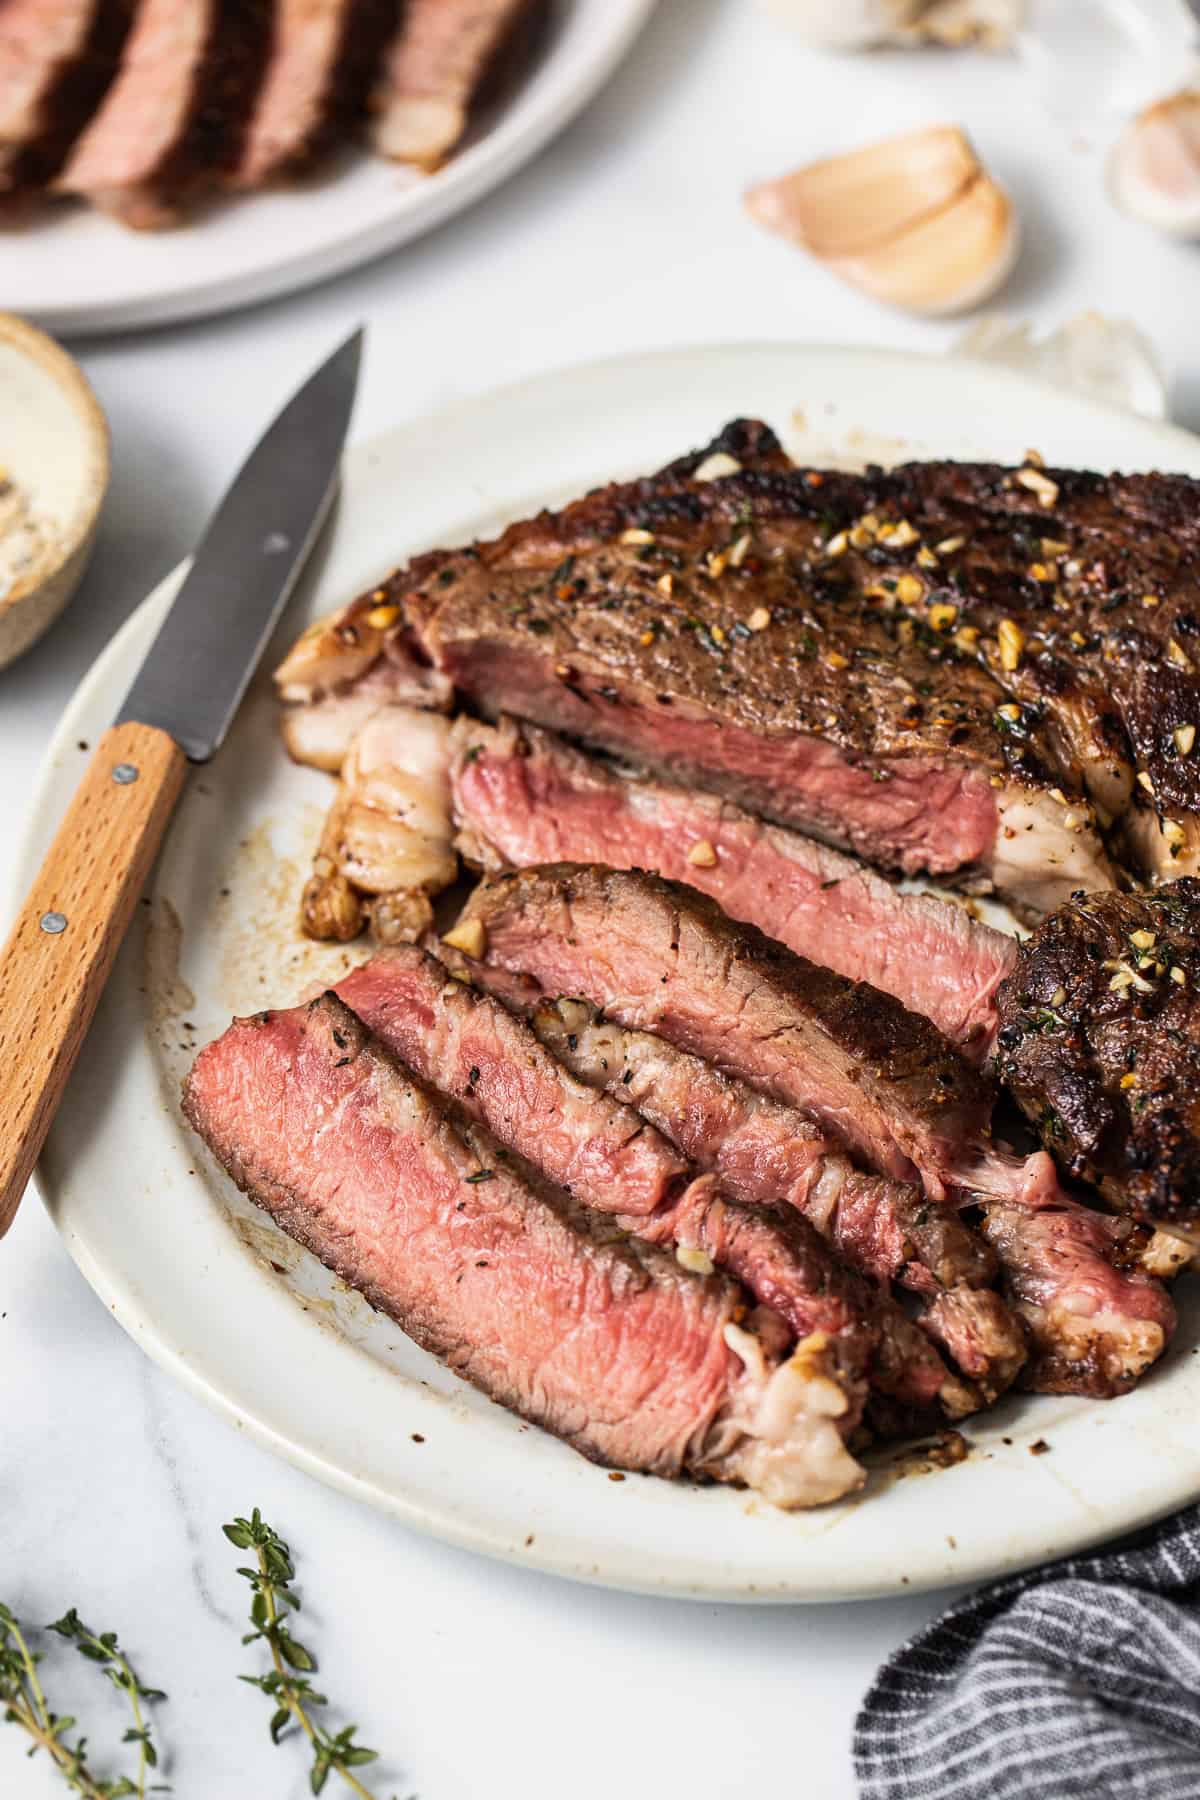 Sliced steak on a plate. 